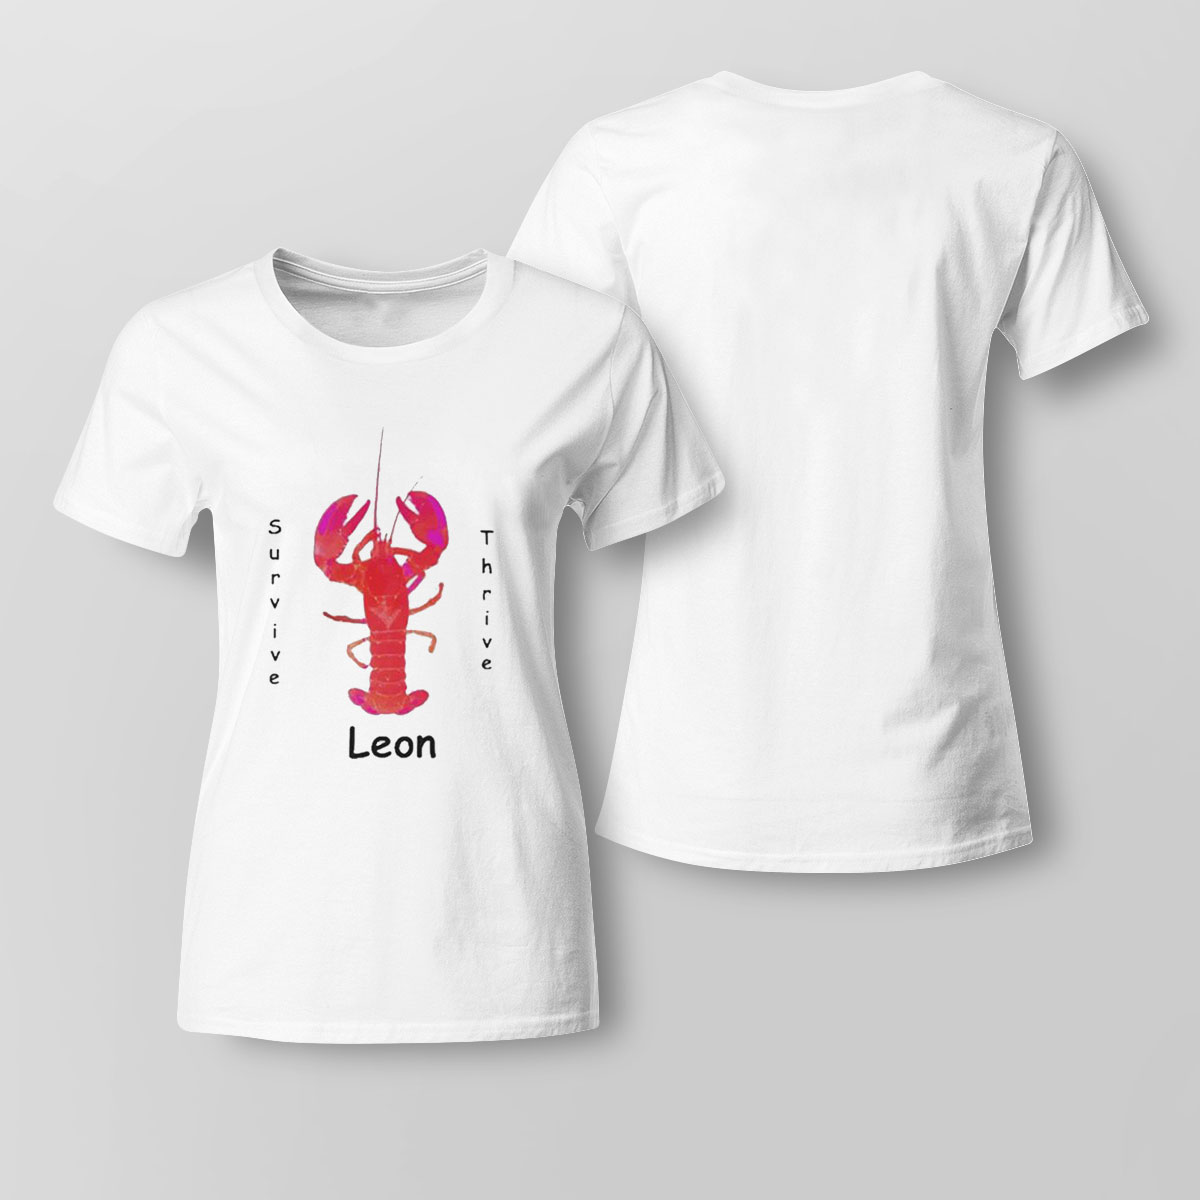 Leon Survive Thrive 2022 Shirt